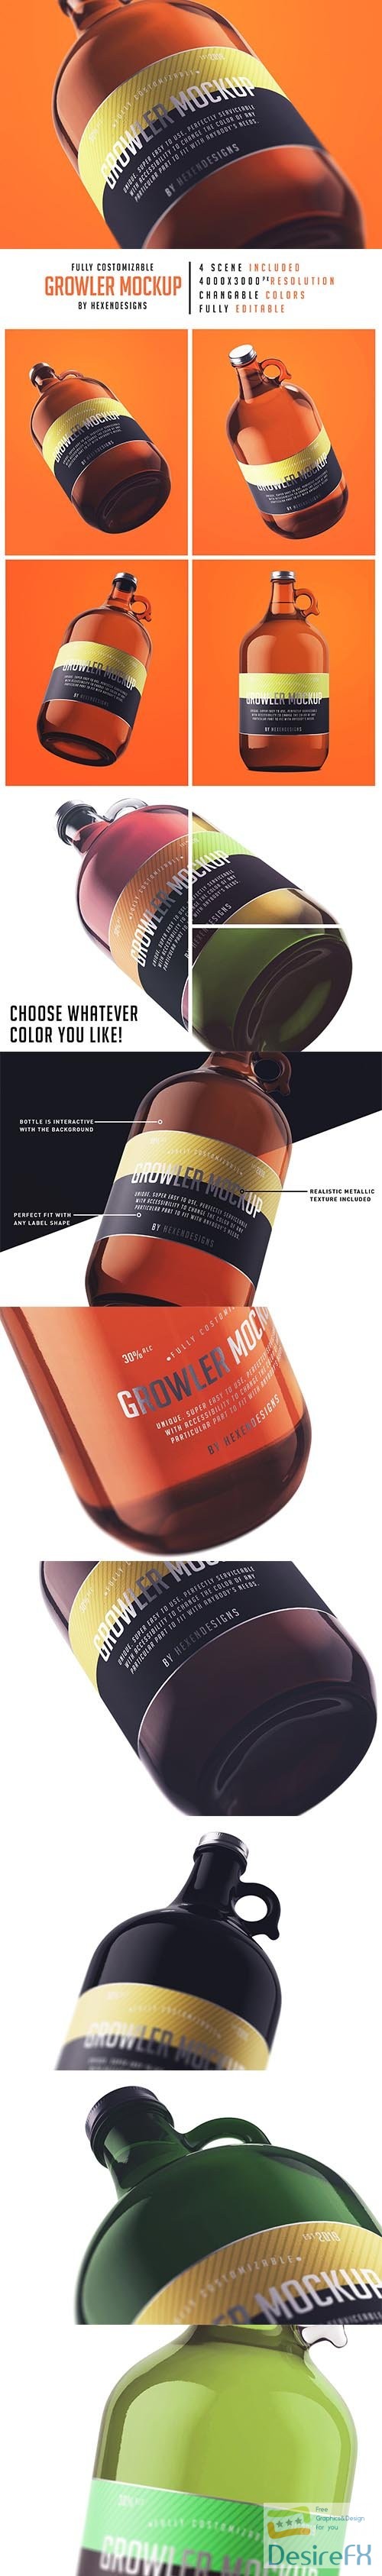 CreativeMarket - Growler Bottle Mockup 3633155